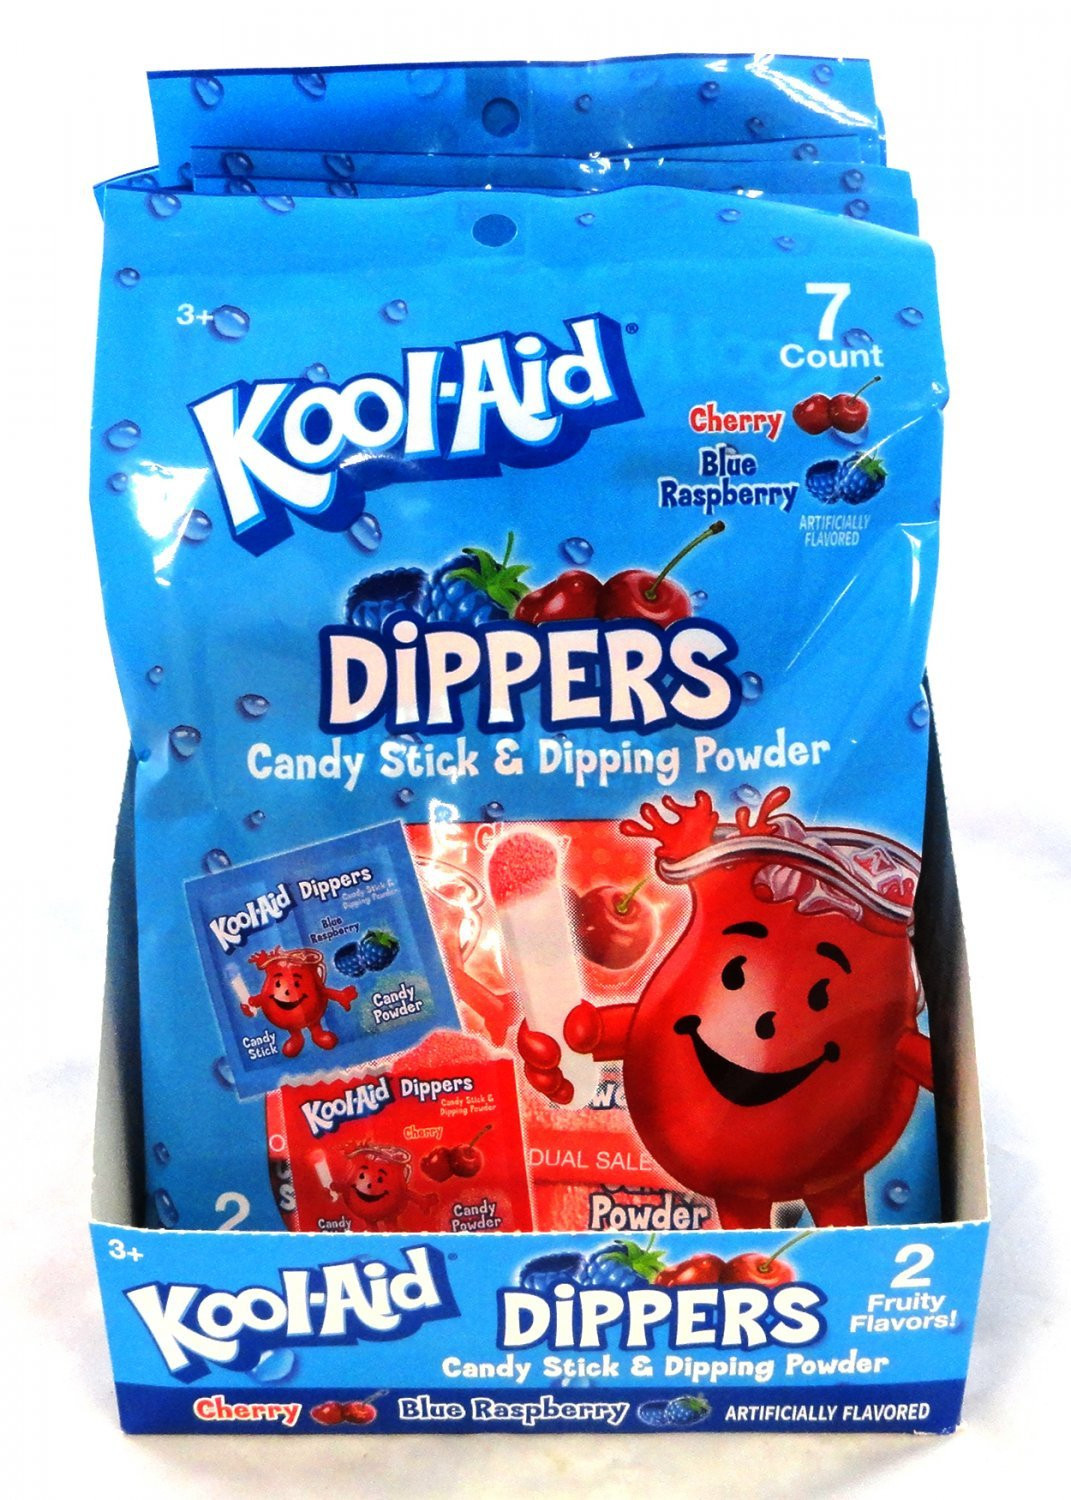 Kool-Aid Kool-Aid 7ct. Dipping Candy Peg Bag